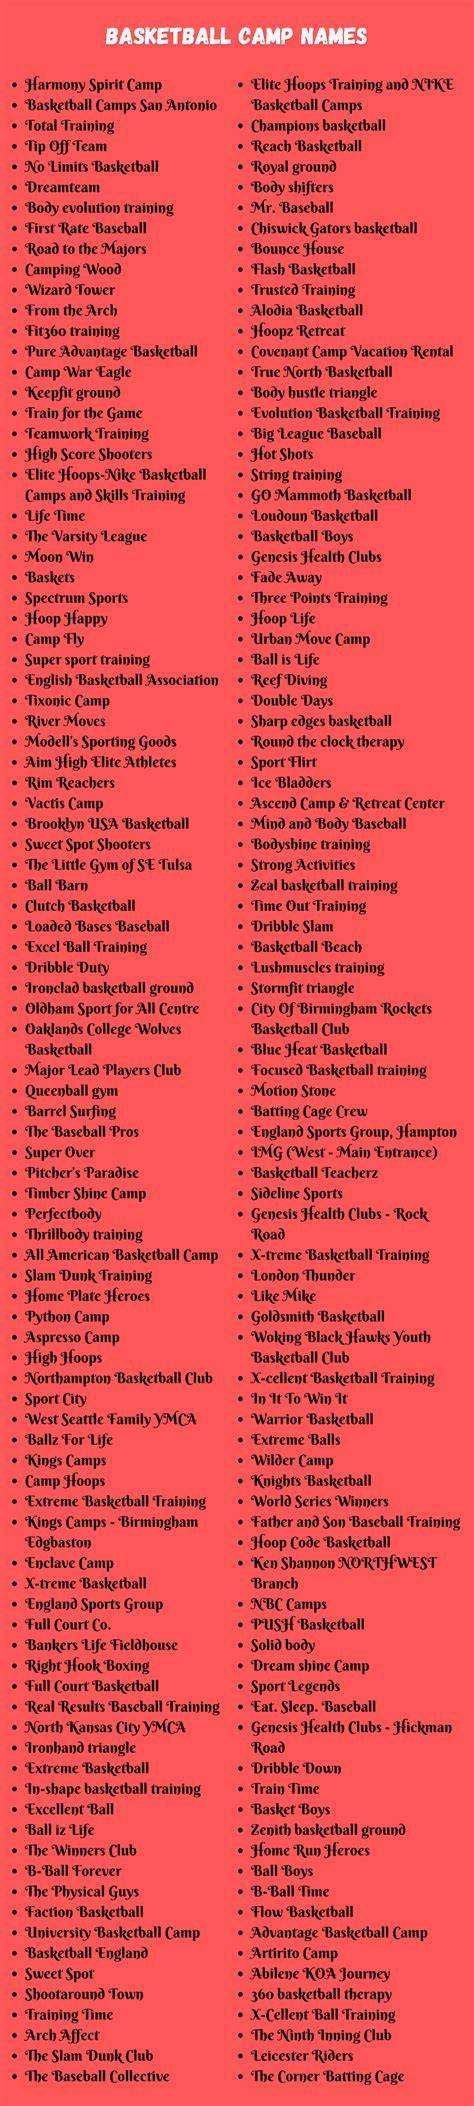 Basketball Camp Names 400 Cool And Creative Camp Names